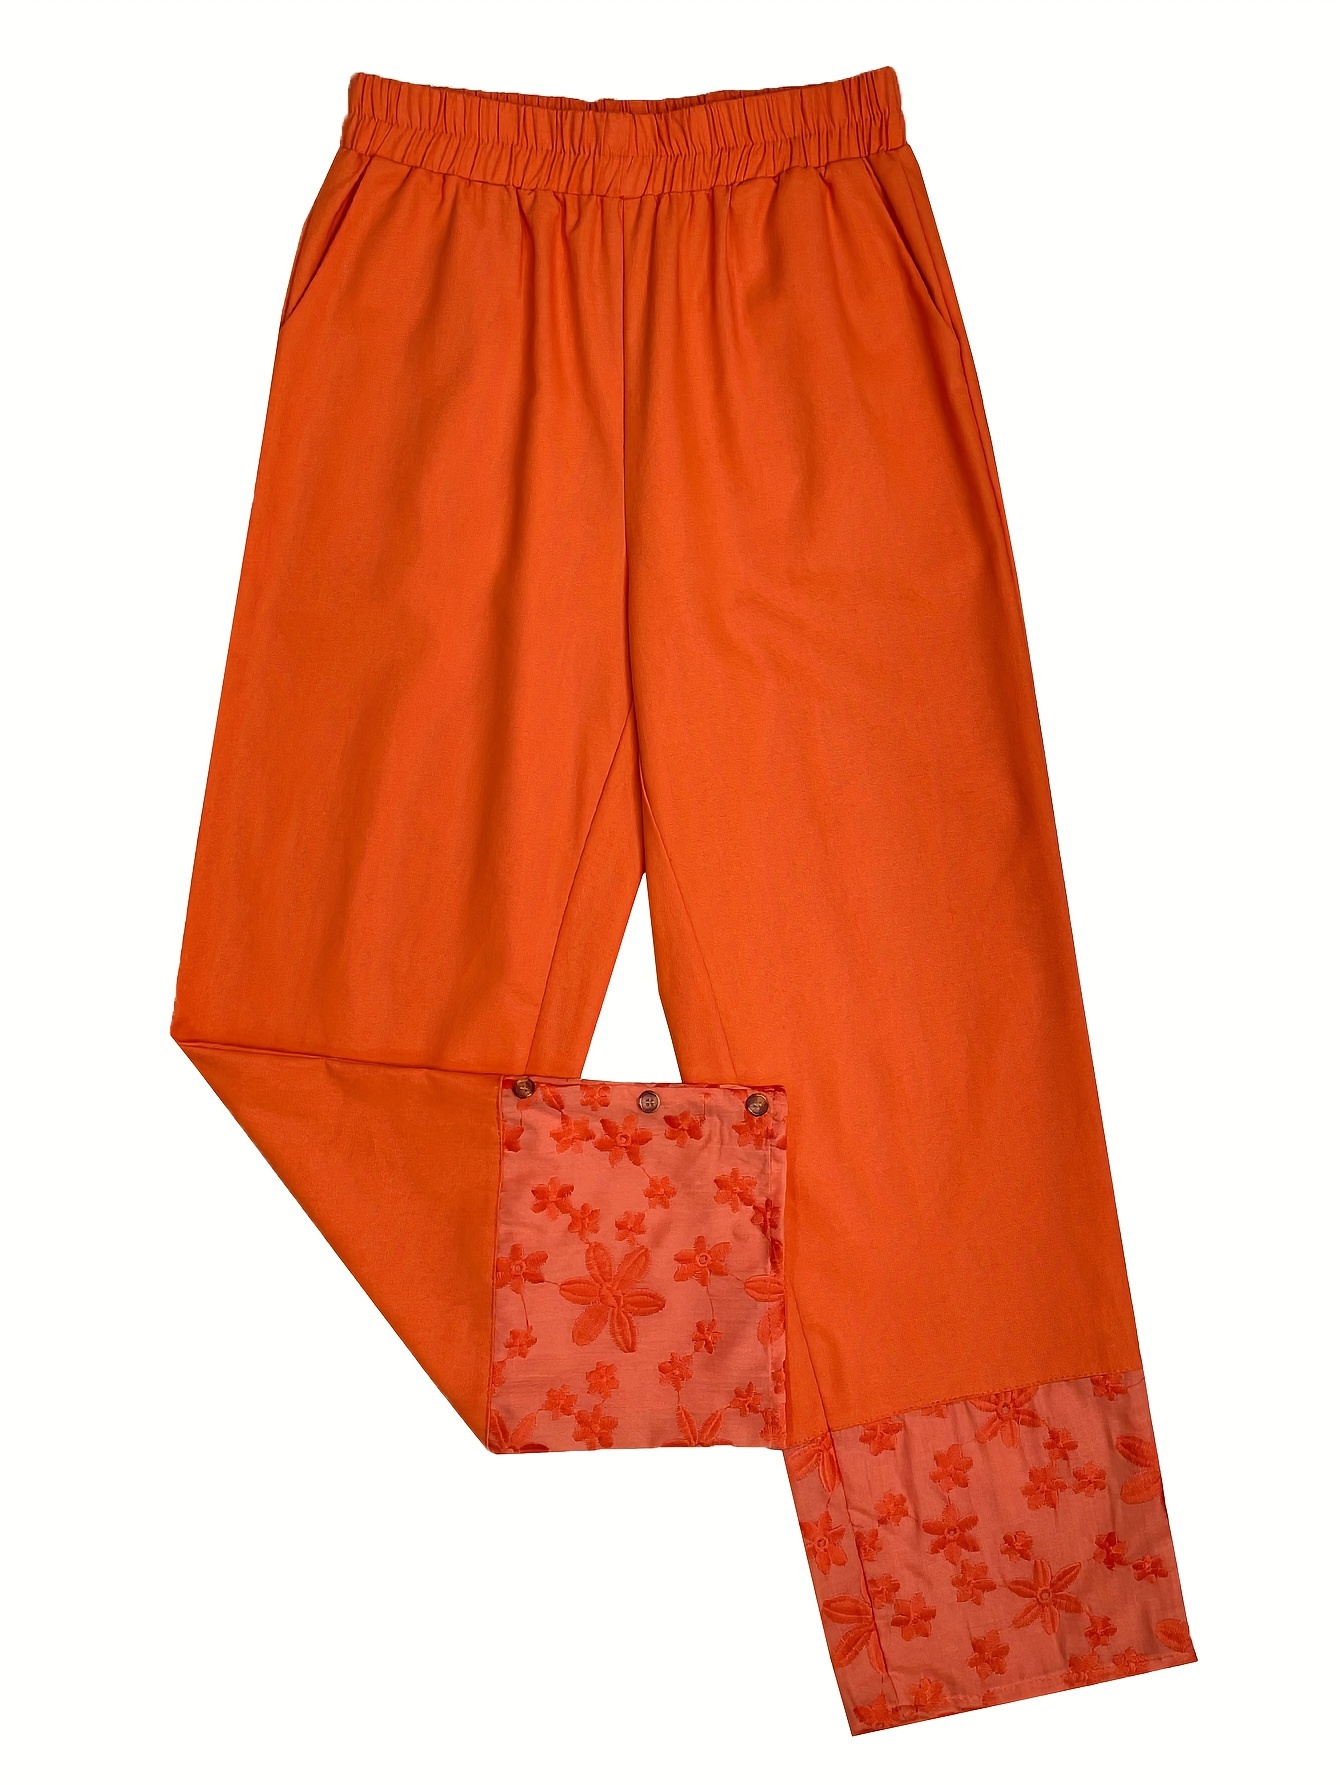 Women for Pants - Elastic Waist Slant Pocket Carrot Pants (Color